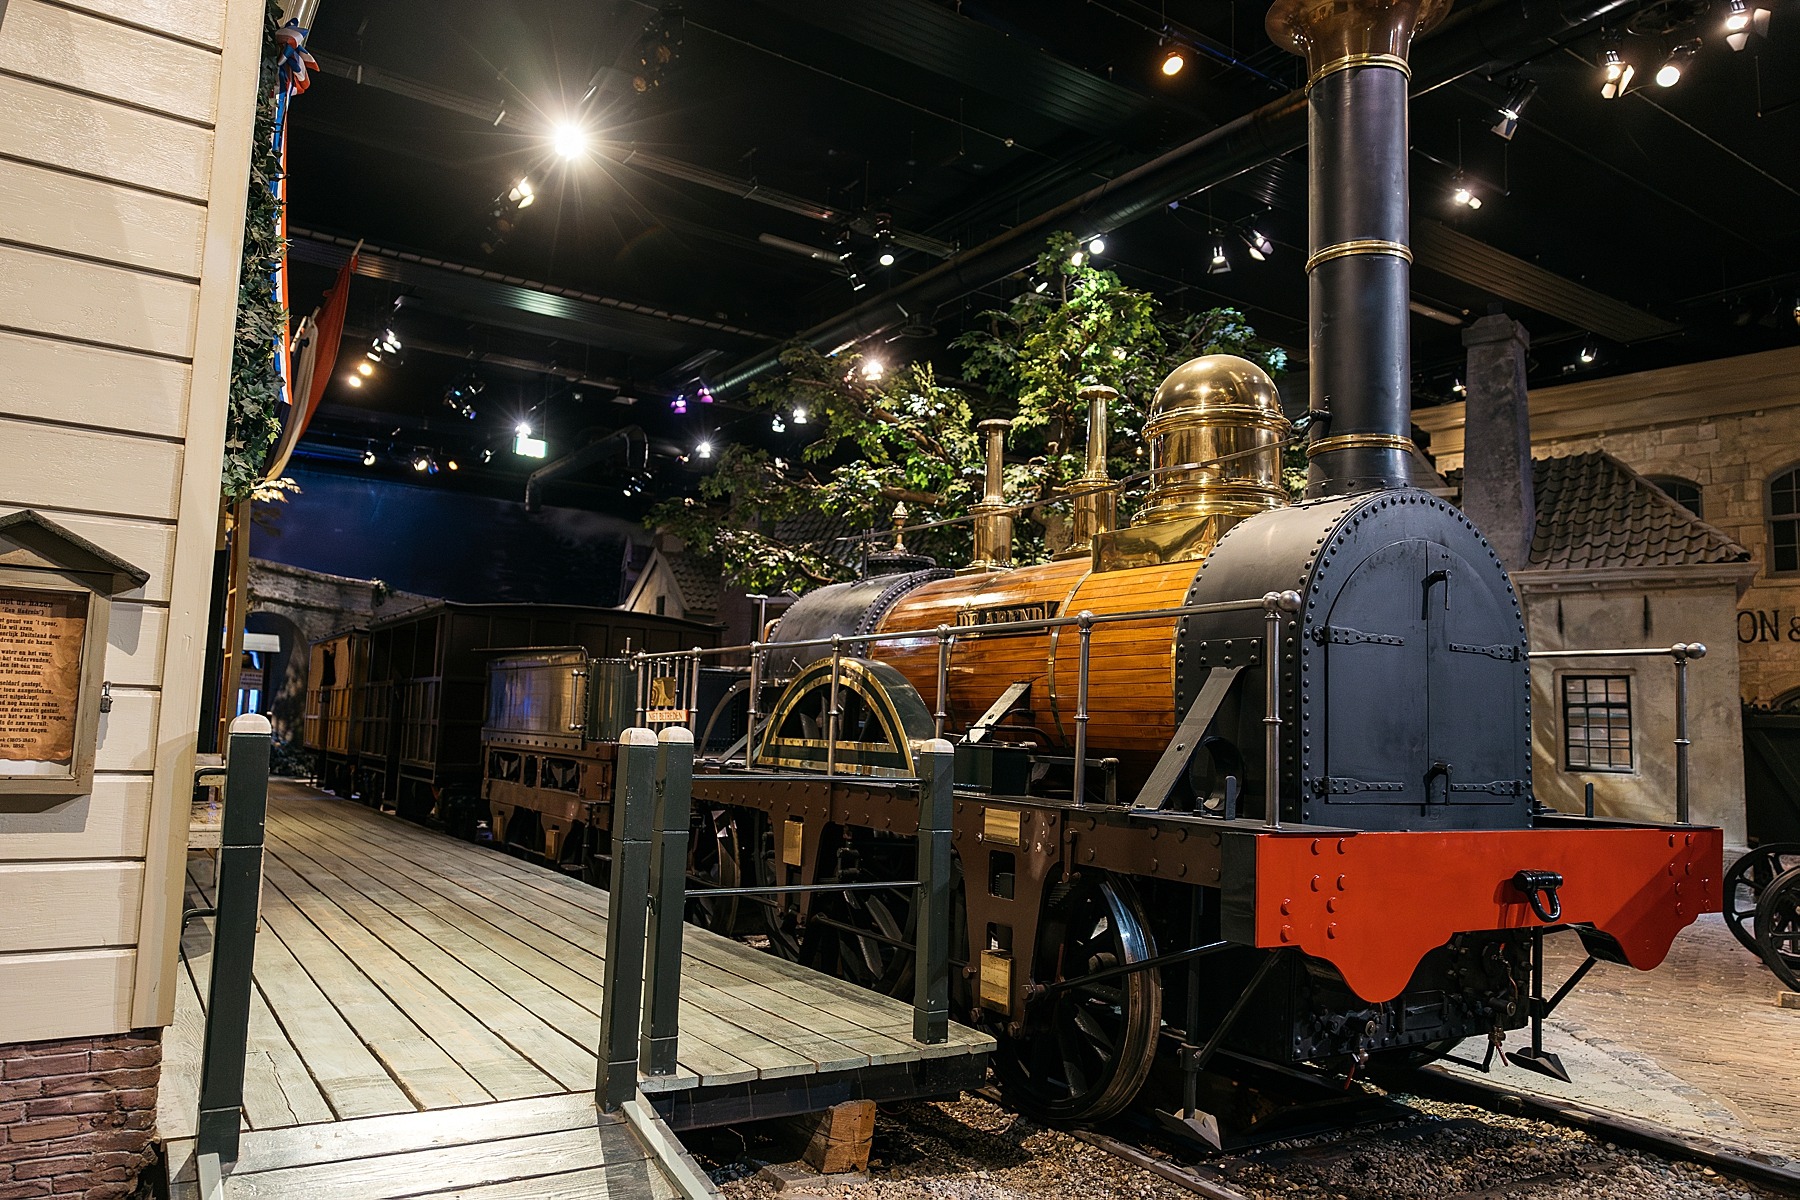 Spoorwegmuseum, l'incroyable musée du train de Utrecht 84